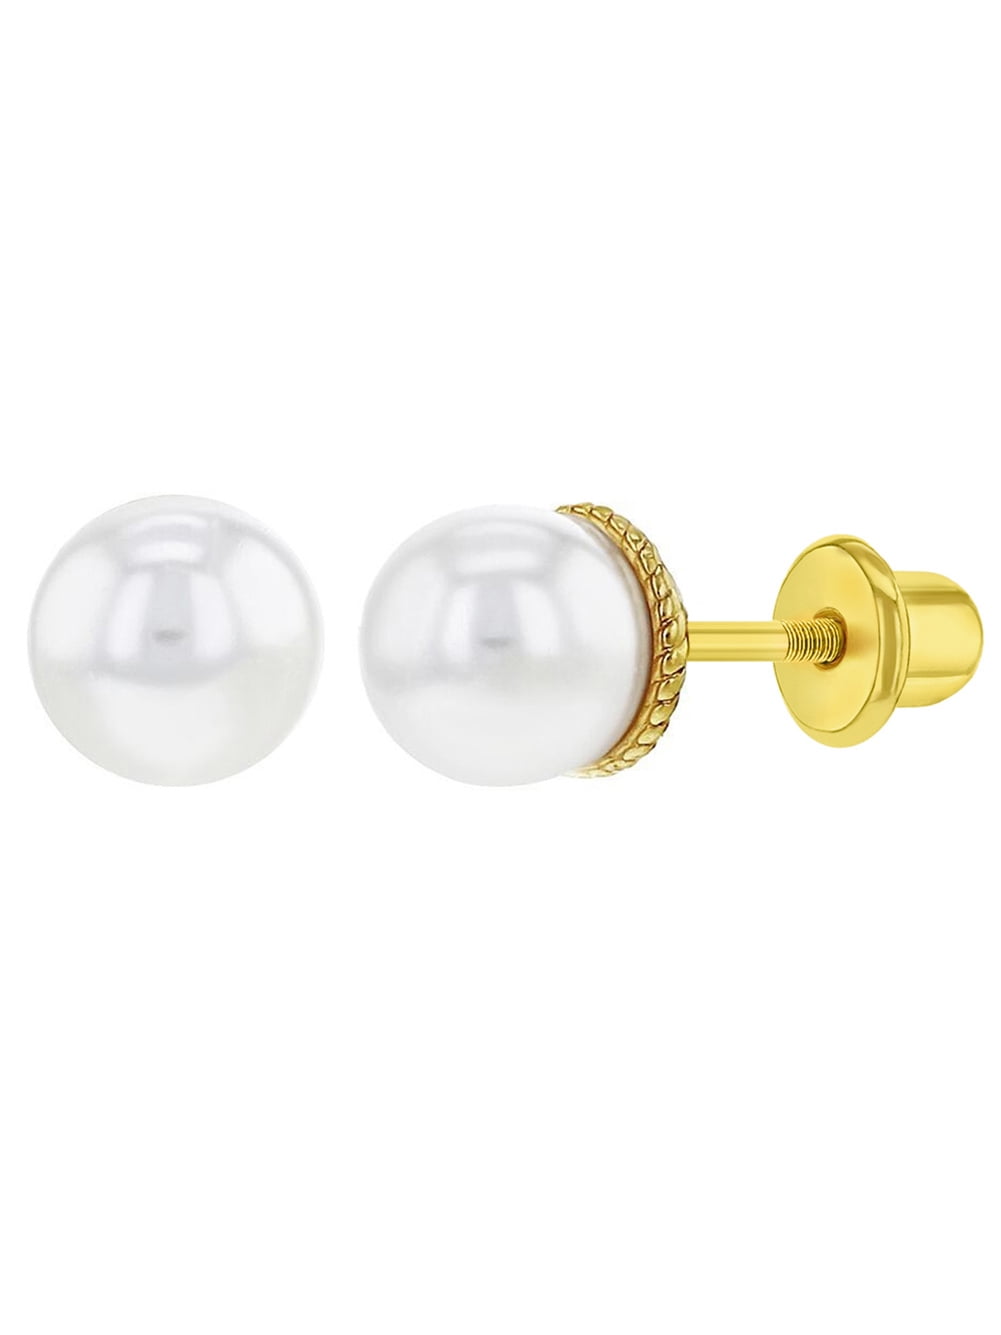 5mm Pearl Screw Back Earrings For Girls In 14k Yellow Gold 